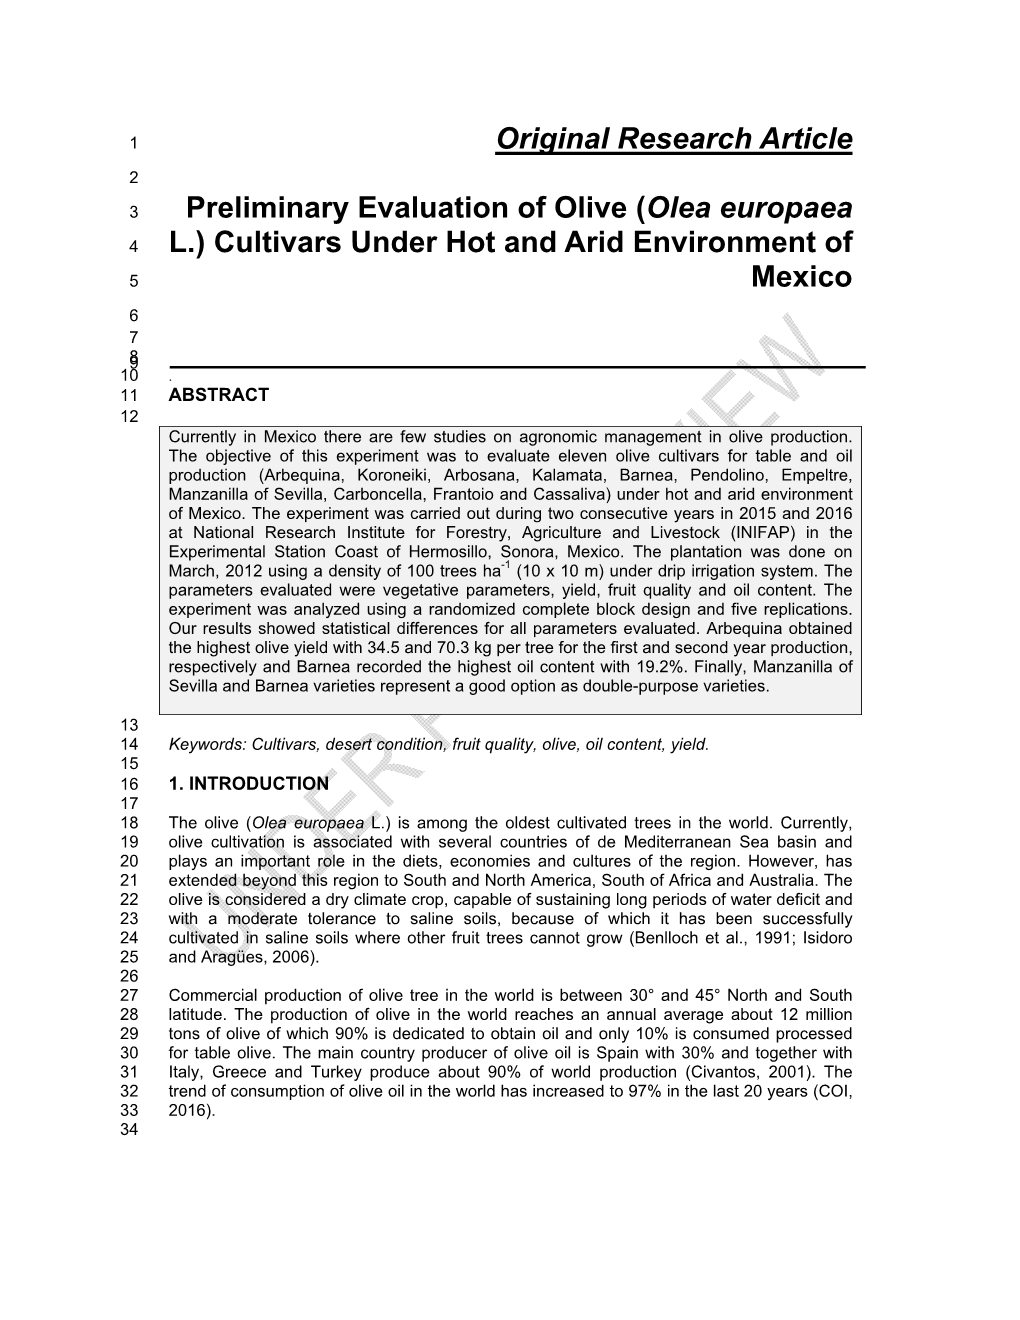 Original Research Article Preliminary Evaluation of Olive (Olea Europaea